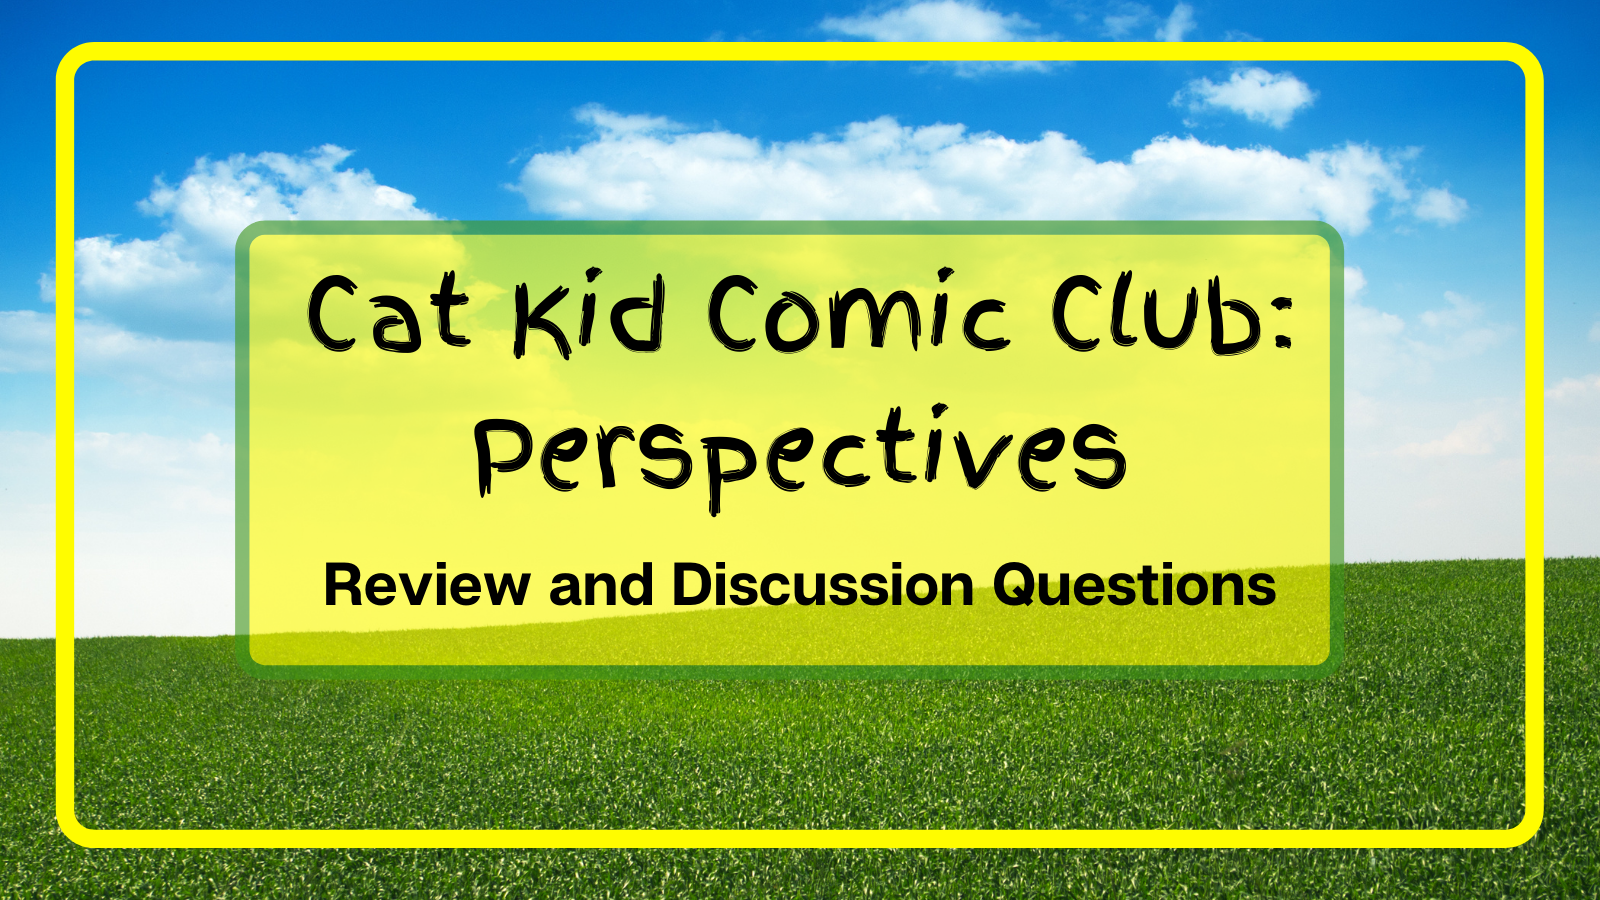 Cat Kid Comic Club: Perspective